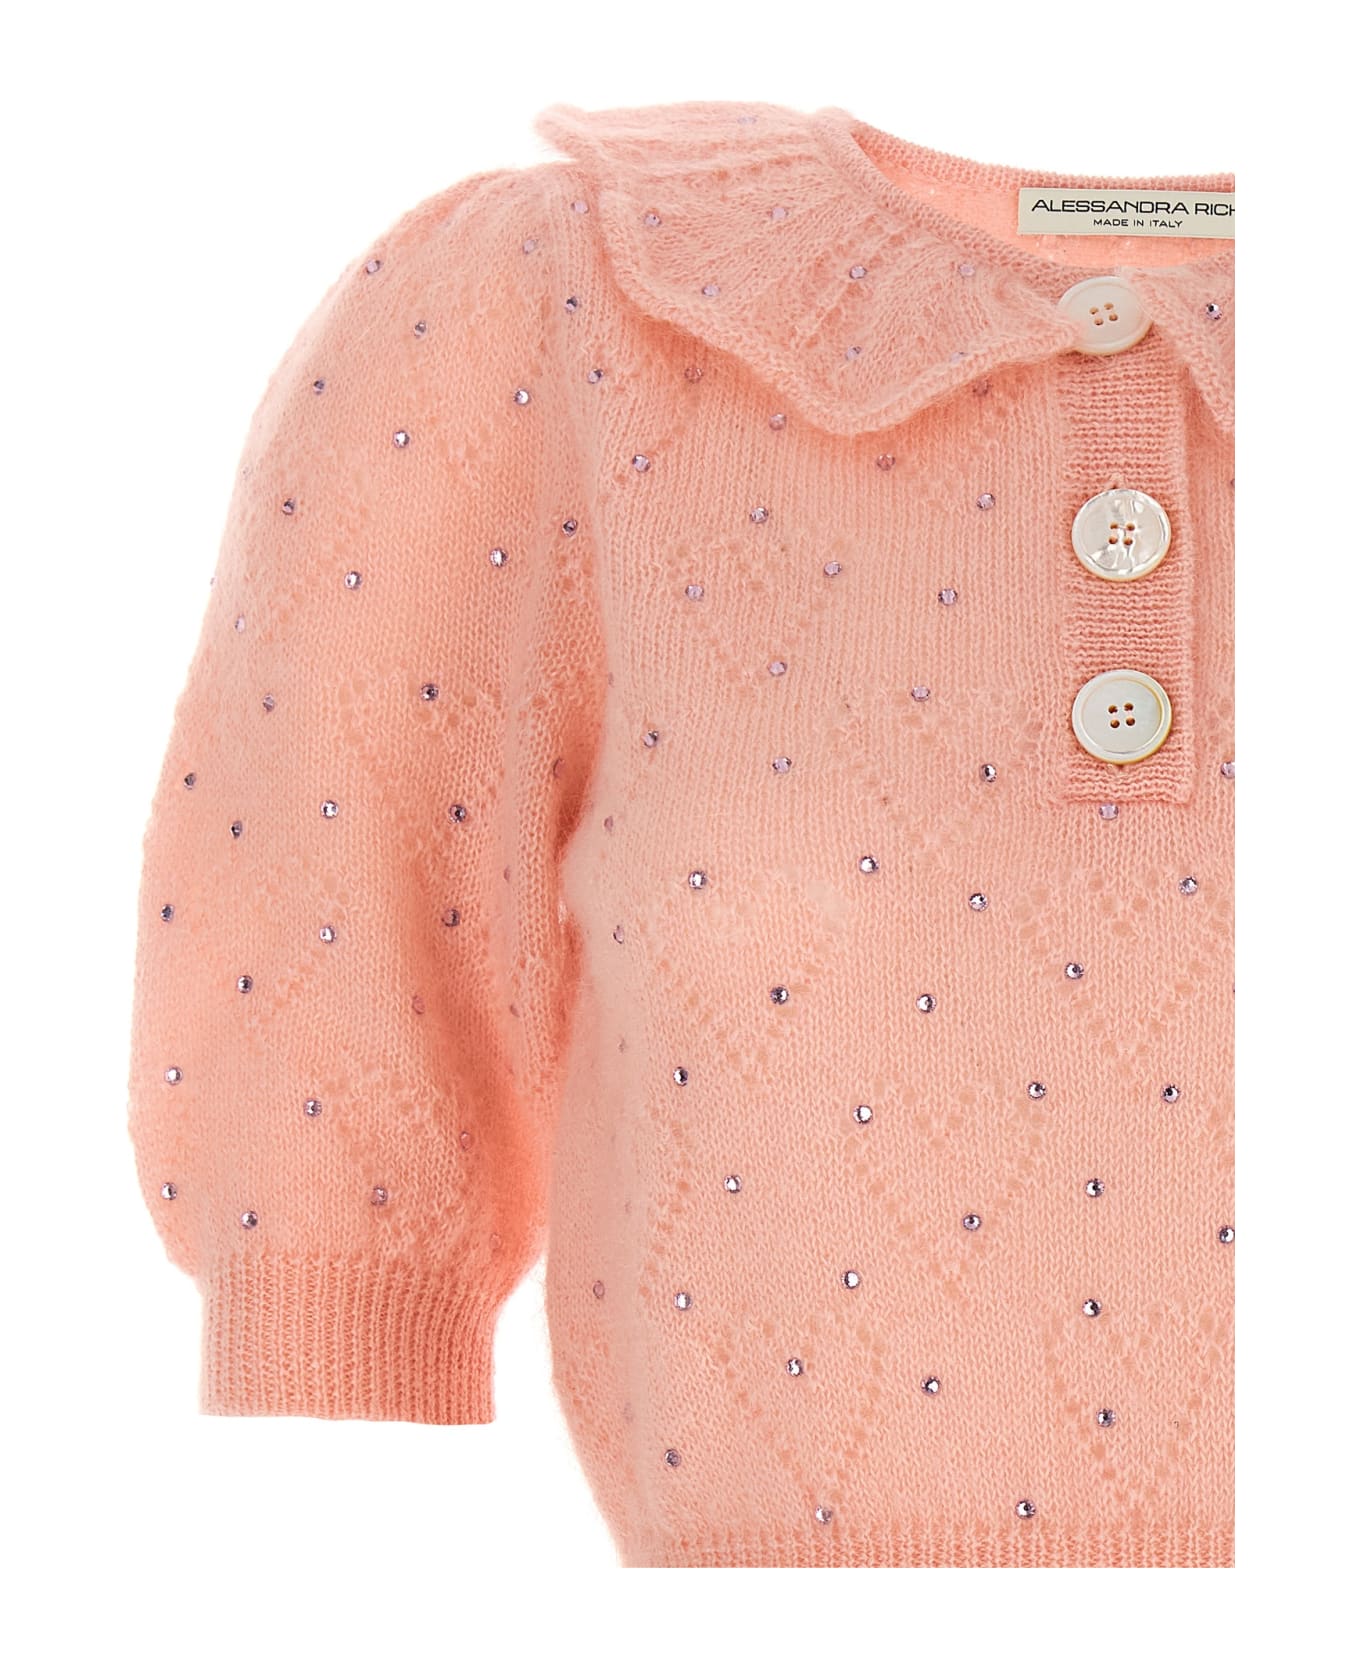 Alessandra Rich Rhinestone Sweater - Pink